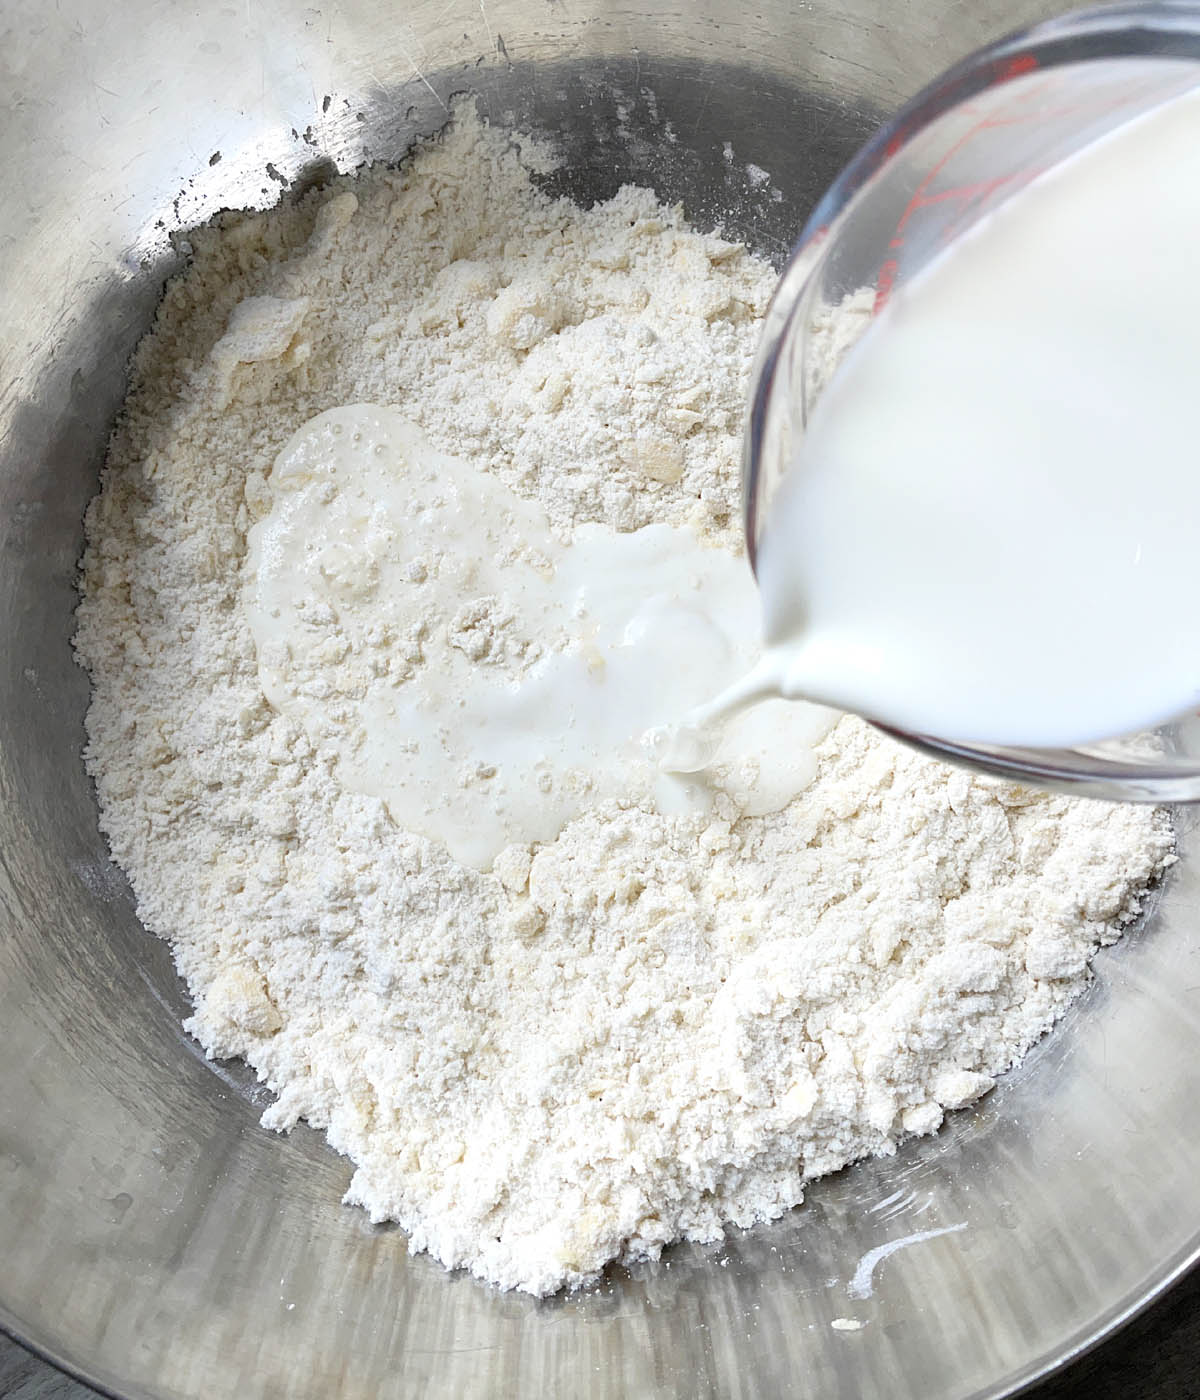 White milk being poured into a metal bowl containing white flours.